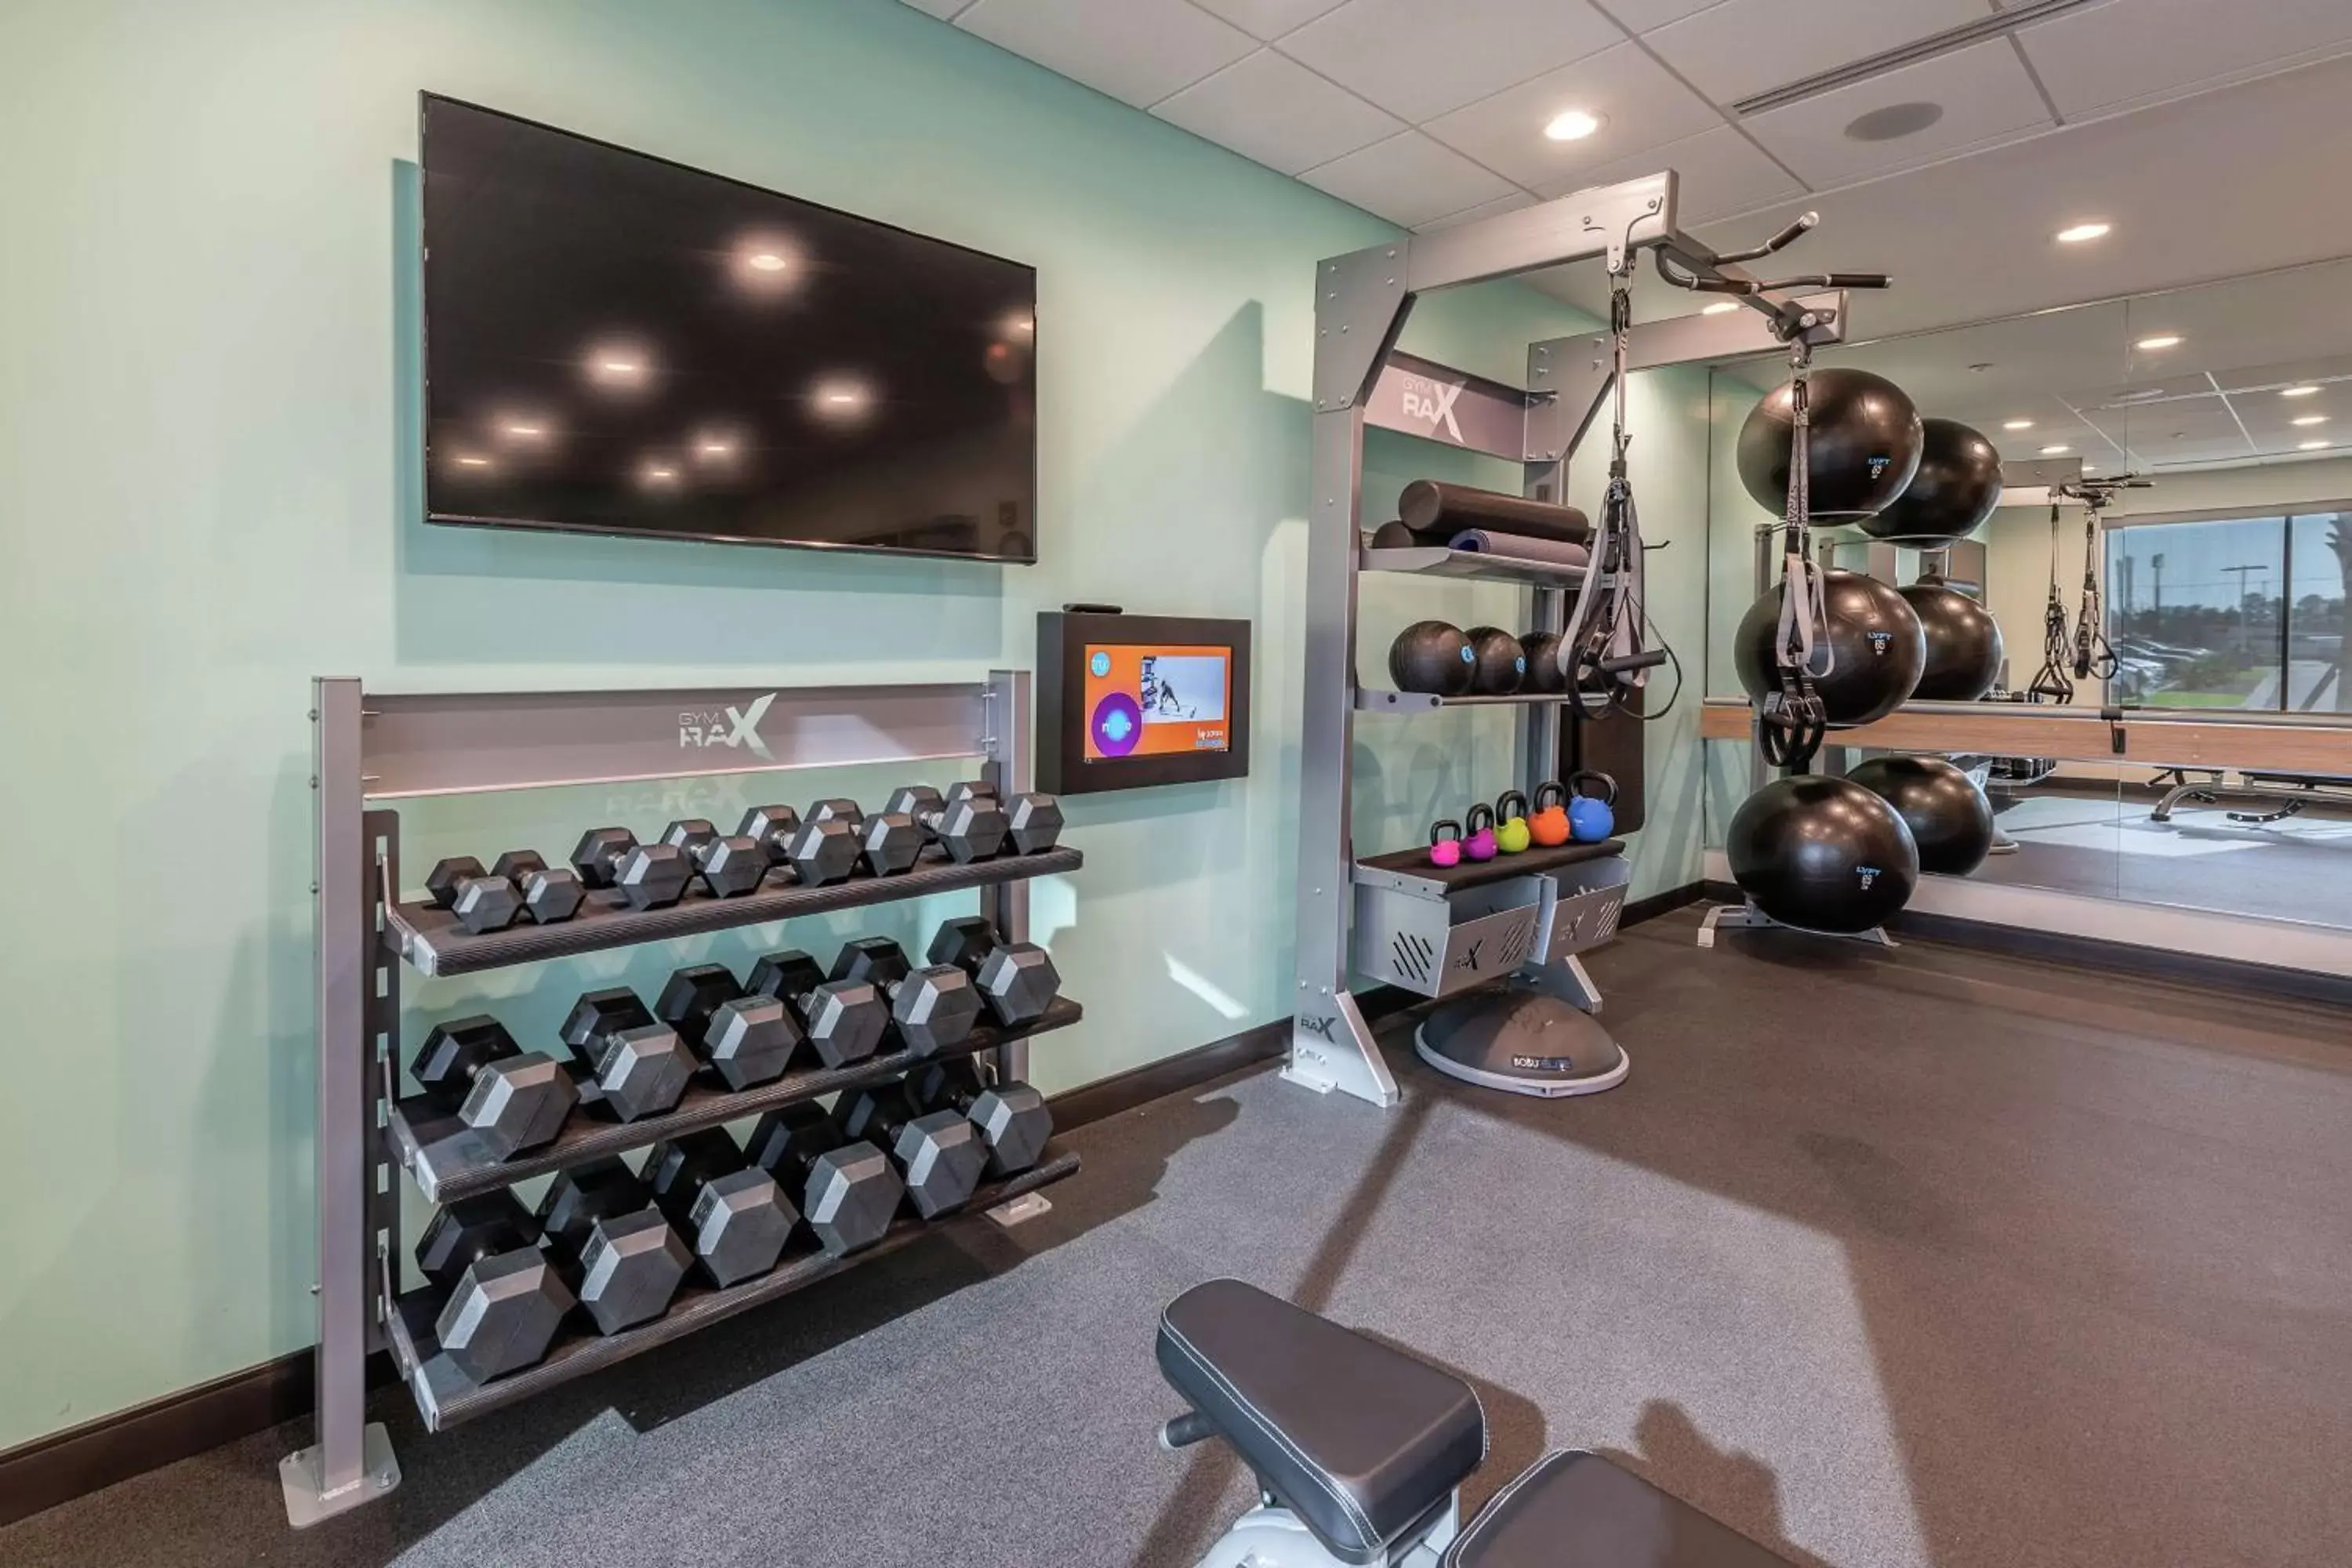 Fitness centre/facilities, Fitness Center/Facilities in Tru By Hilton Orangeburg